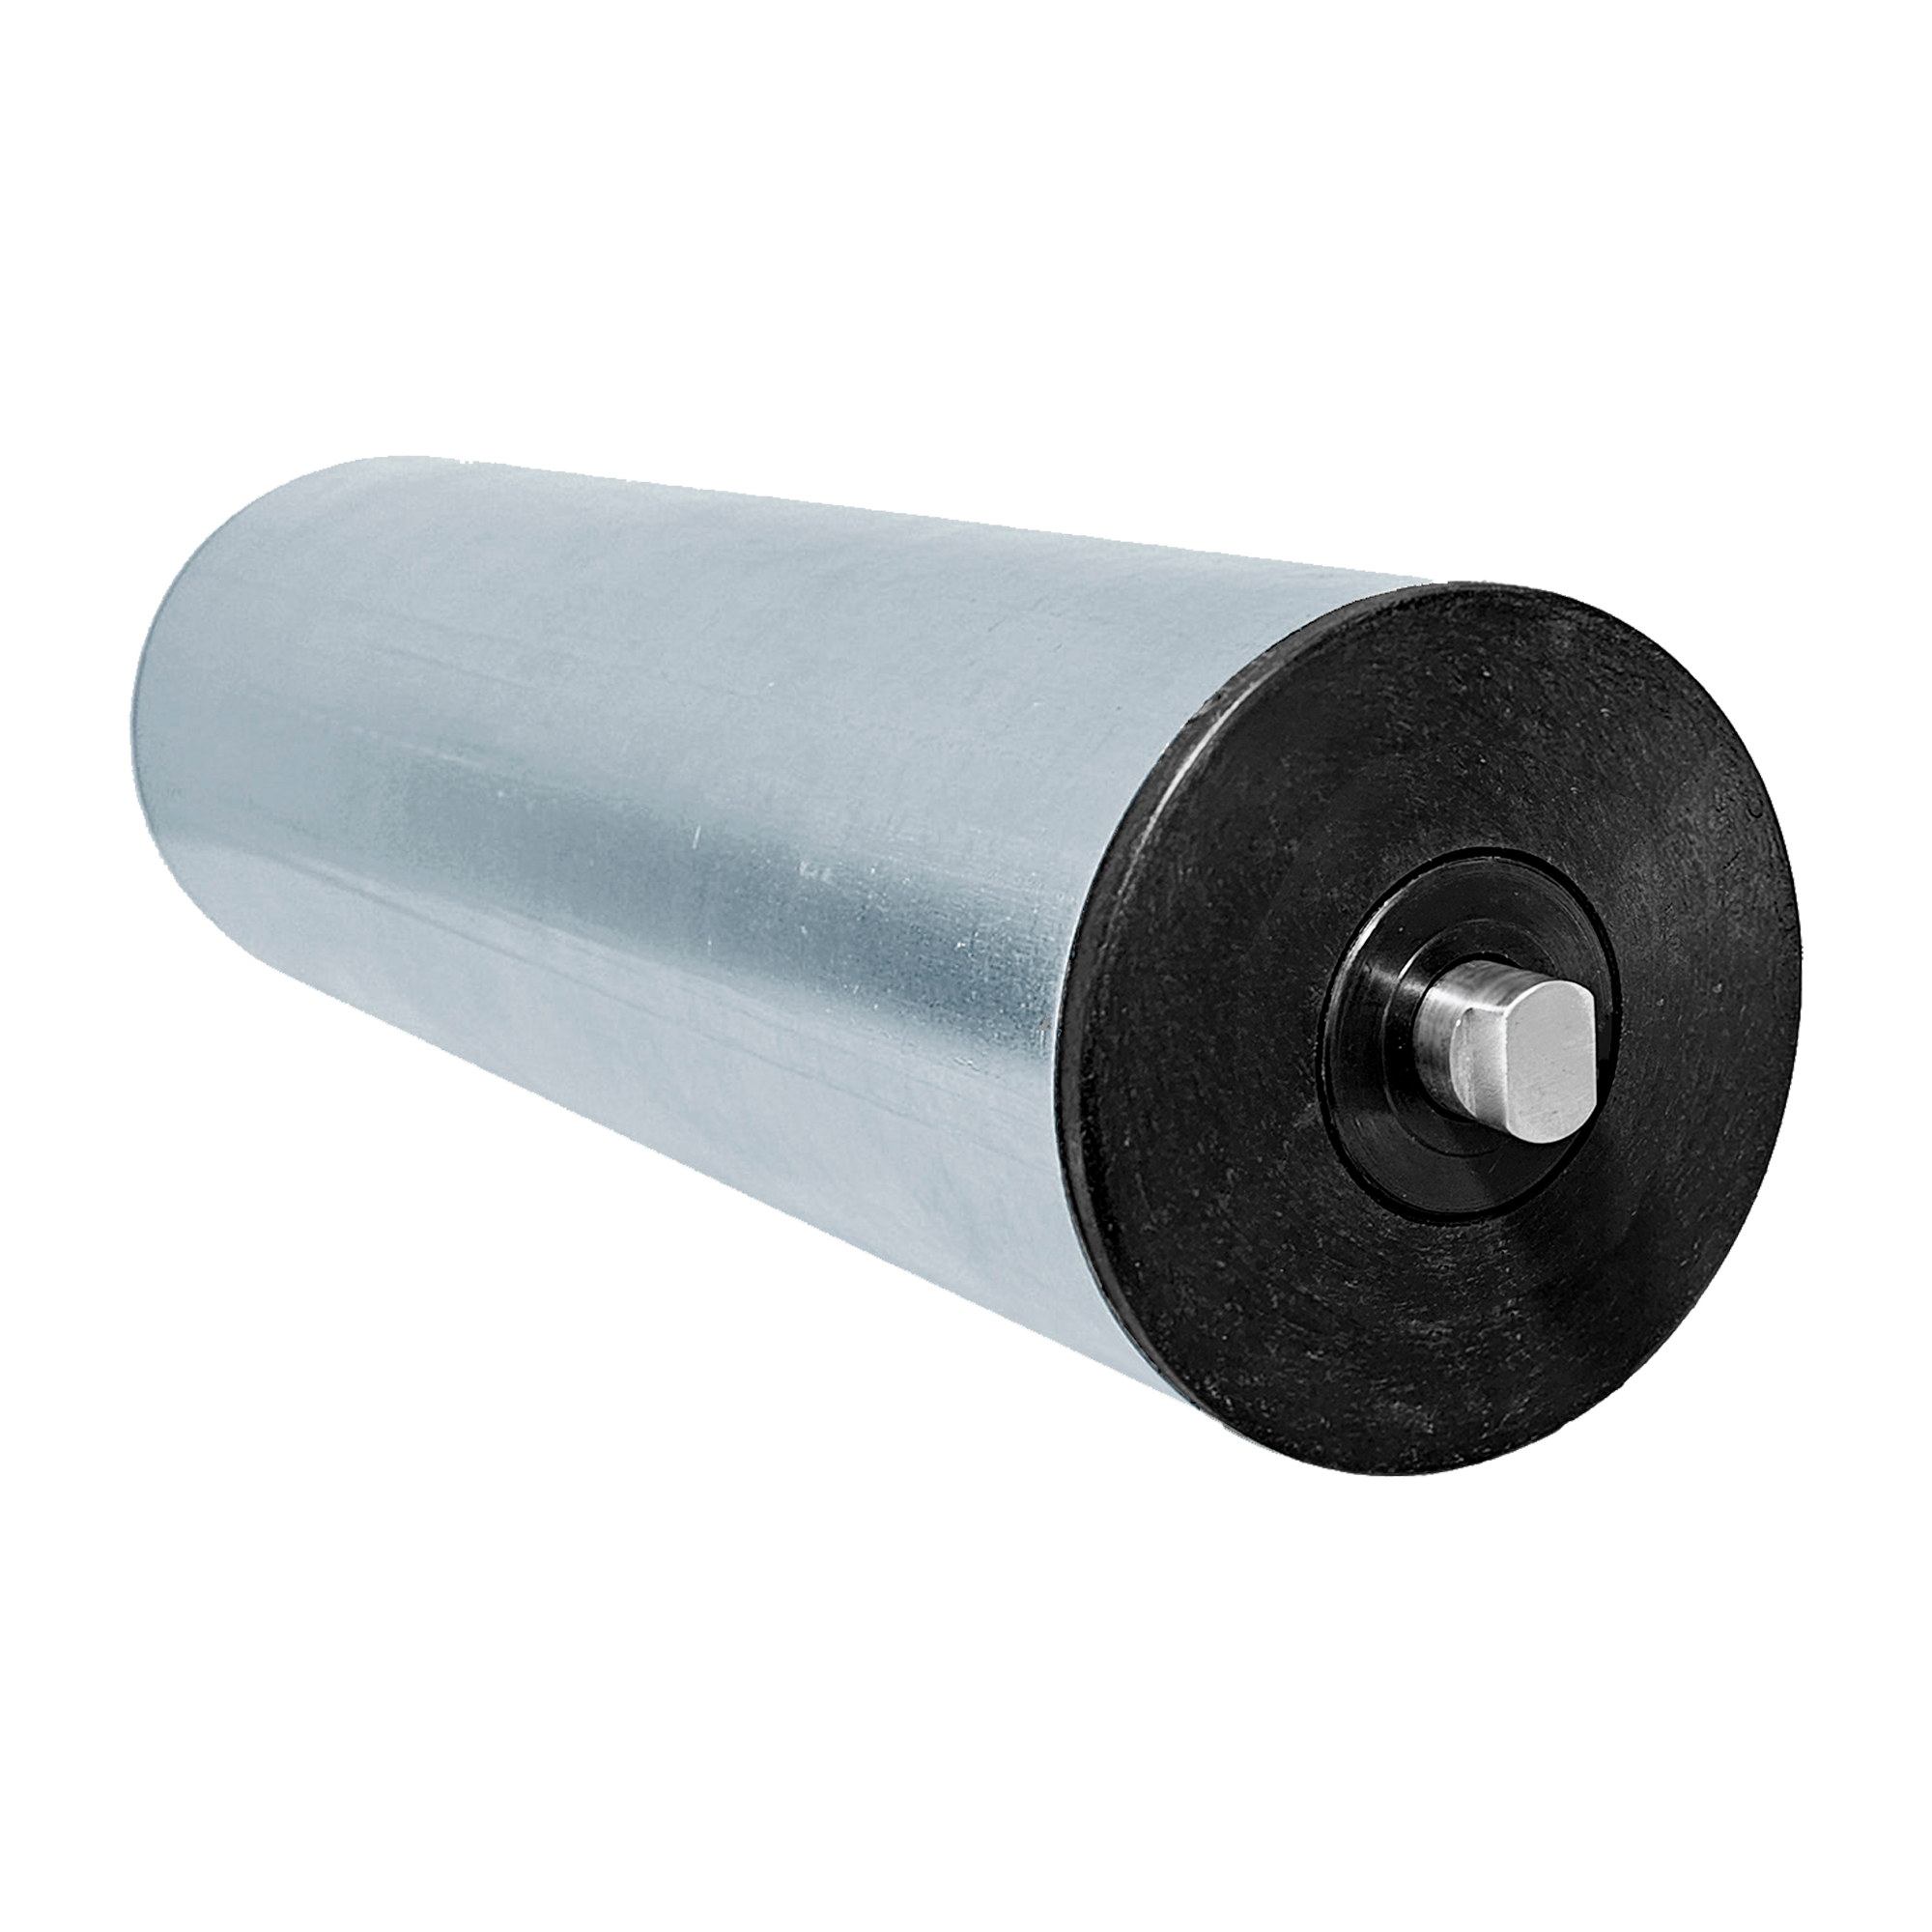 Rolete de Carga - Diâmetro tubo 101,6 mm - Comprimento tubo 650 mm